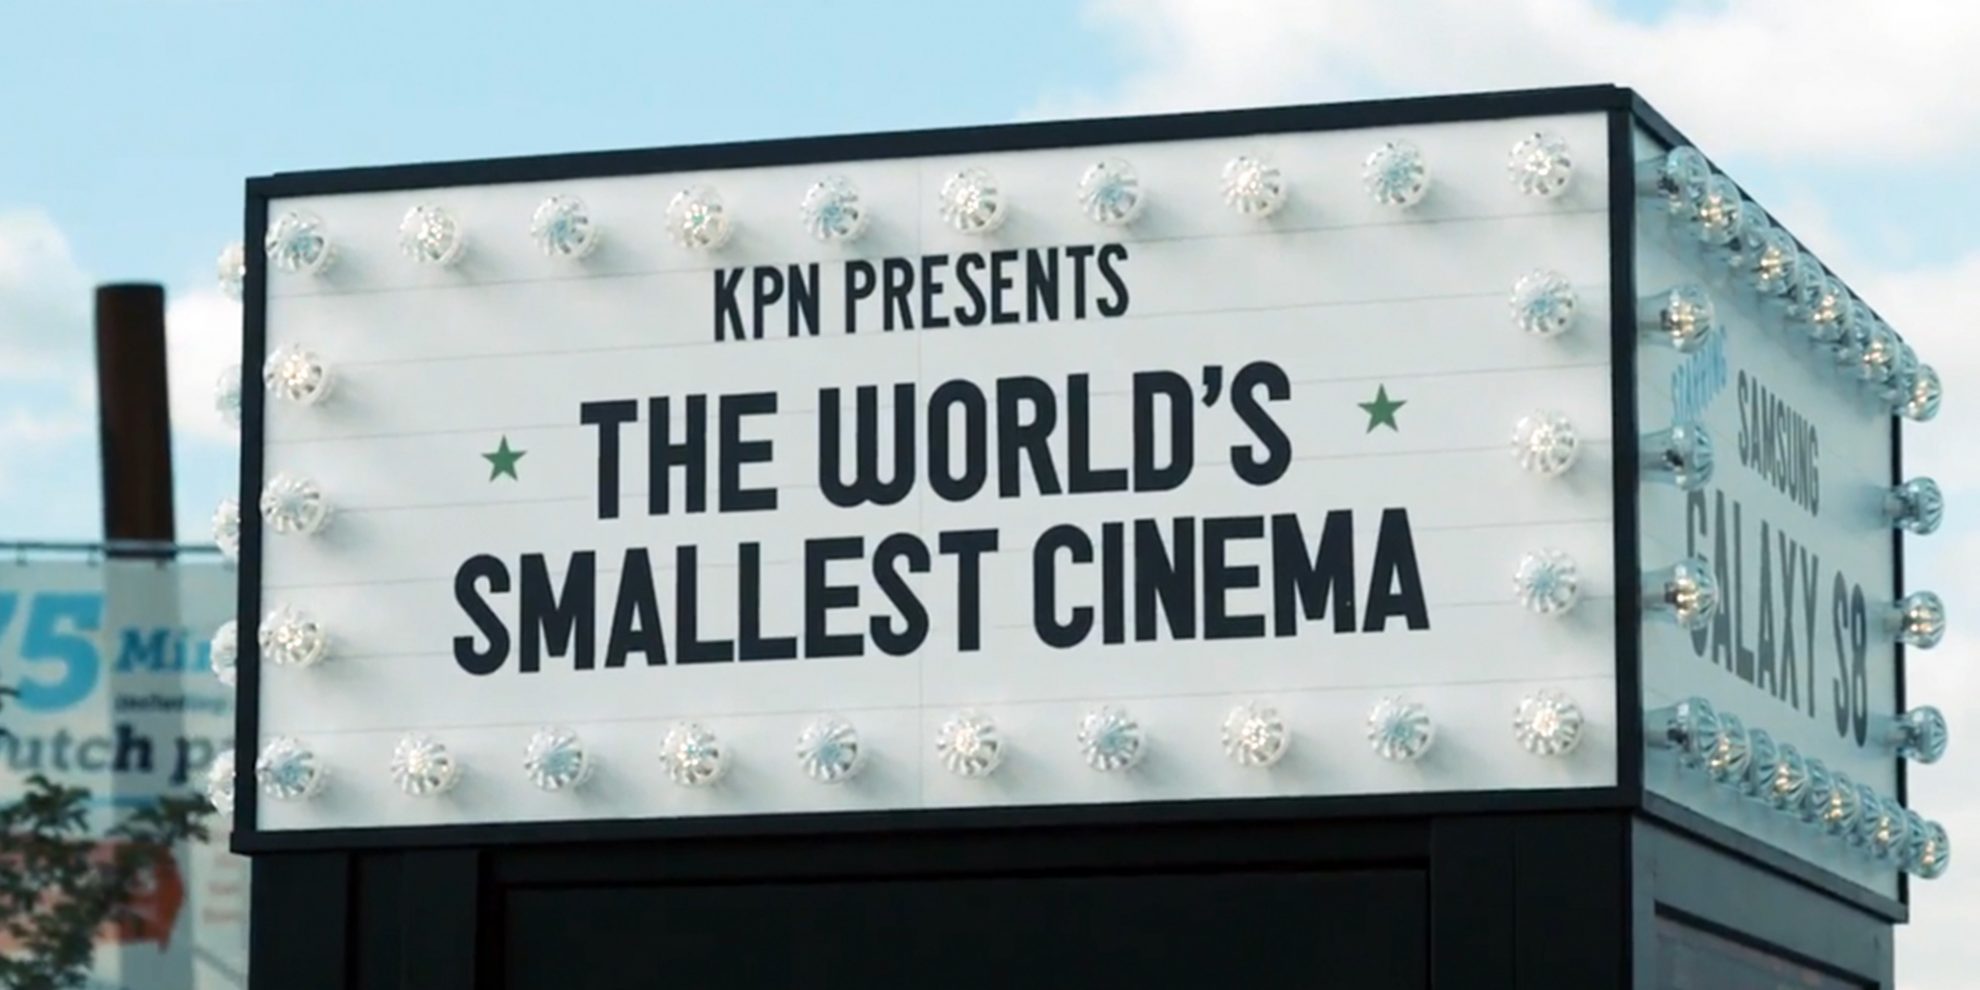 World's smallest cinema